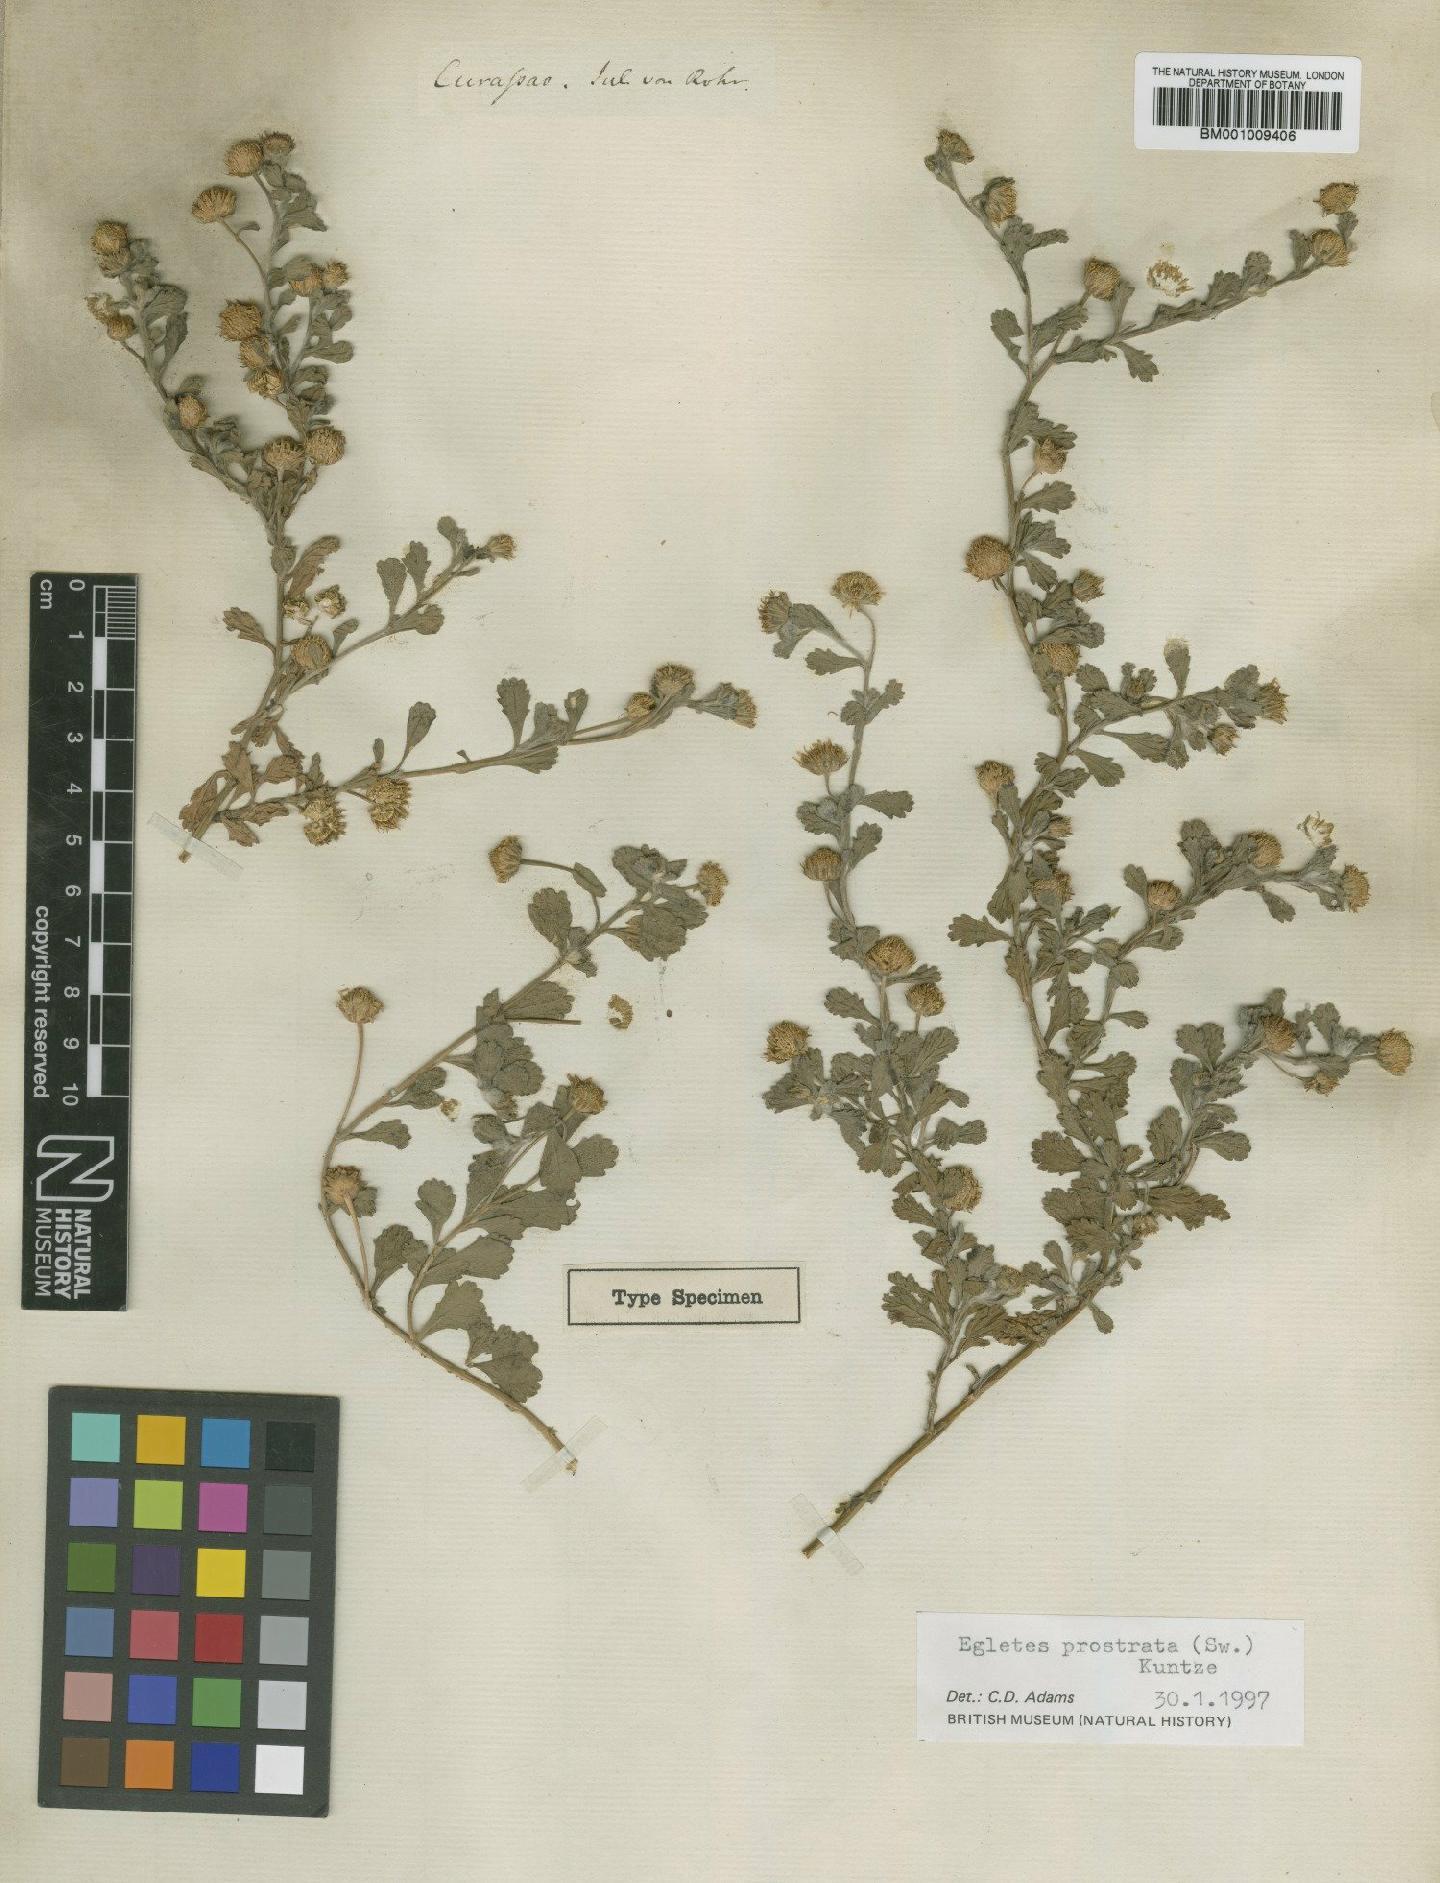 To NHMUK collection (Egletes prostrata (Sw.) Kuntze; Type; NHMUK:ecatalogue:609287)